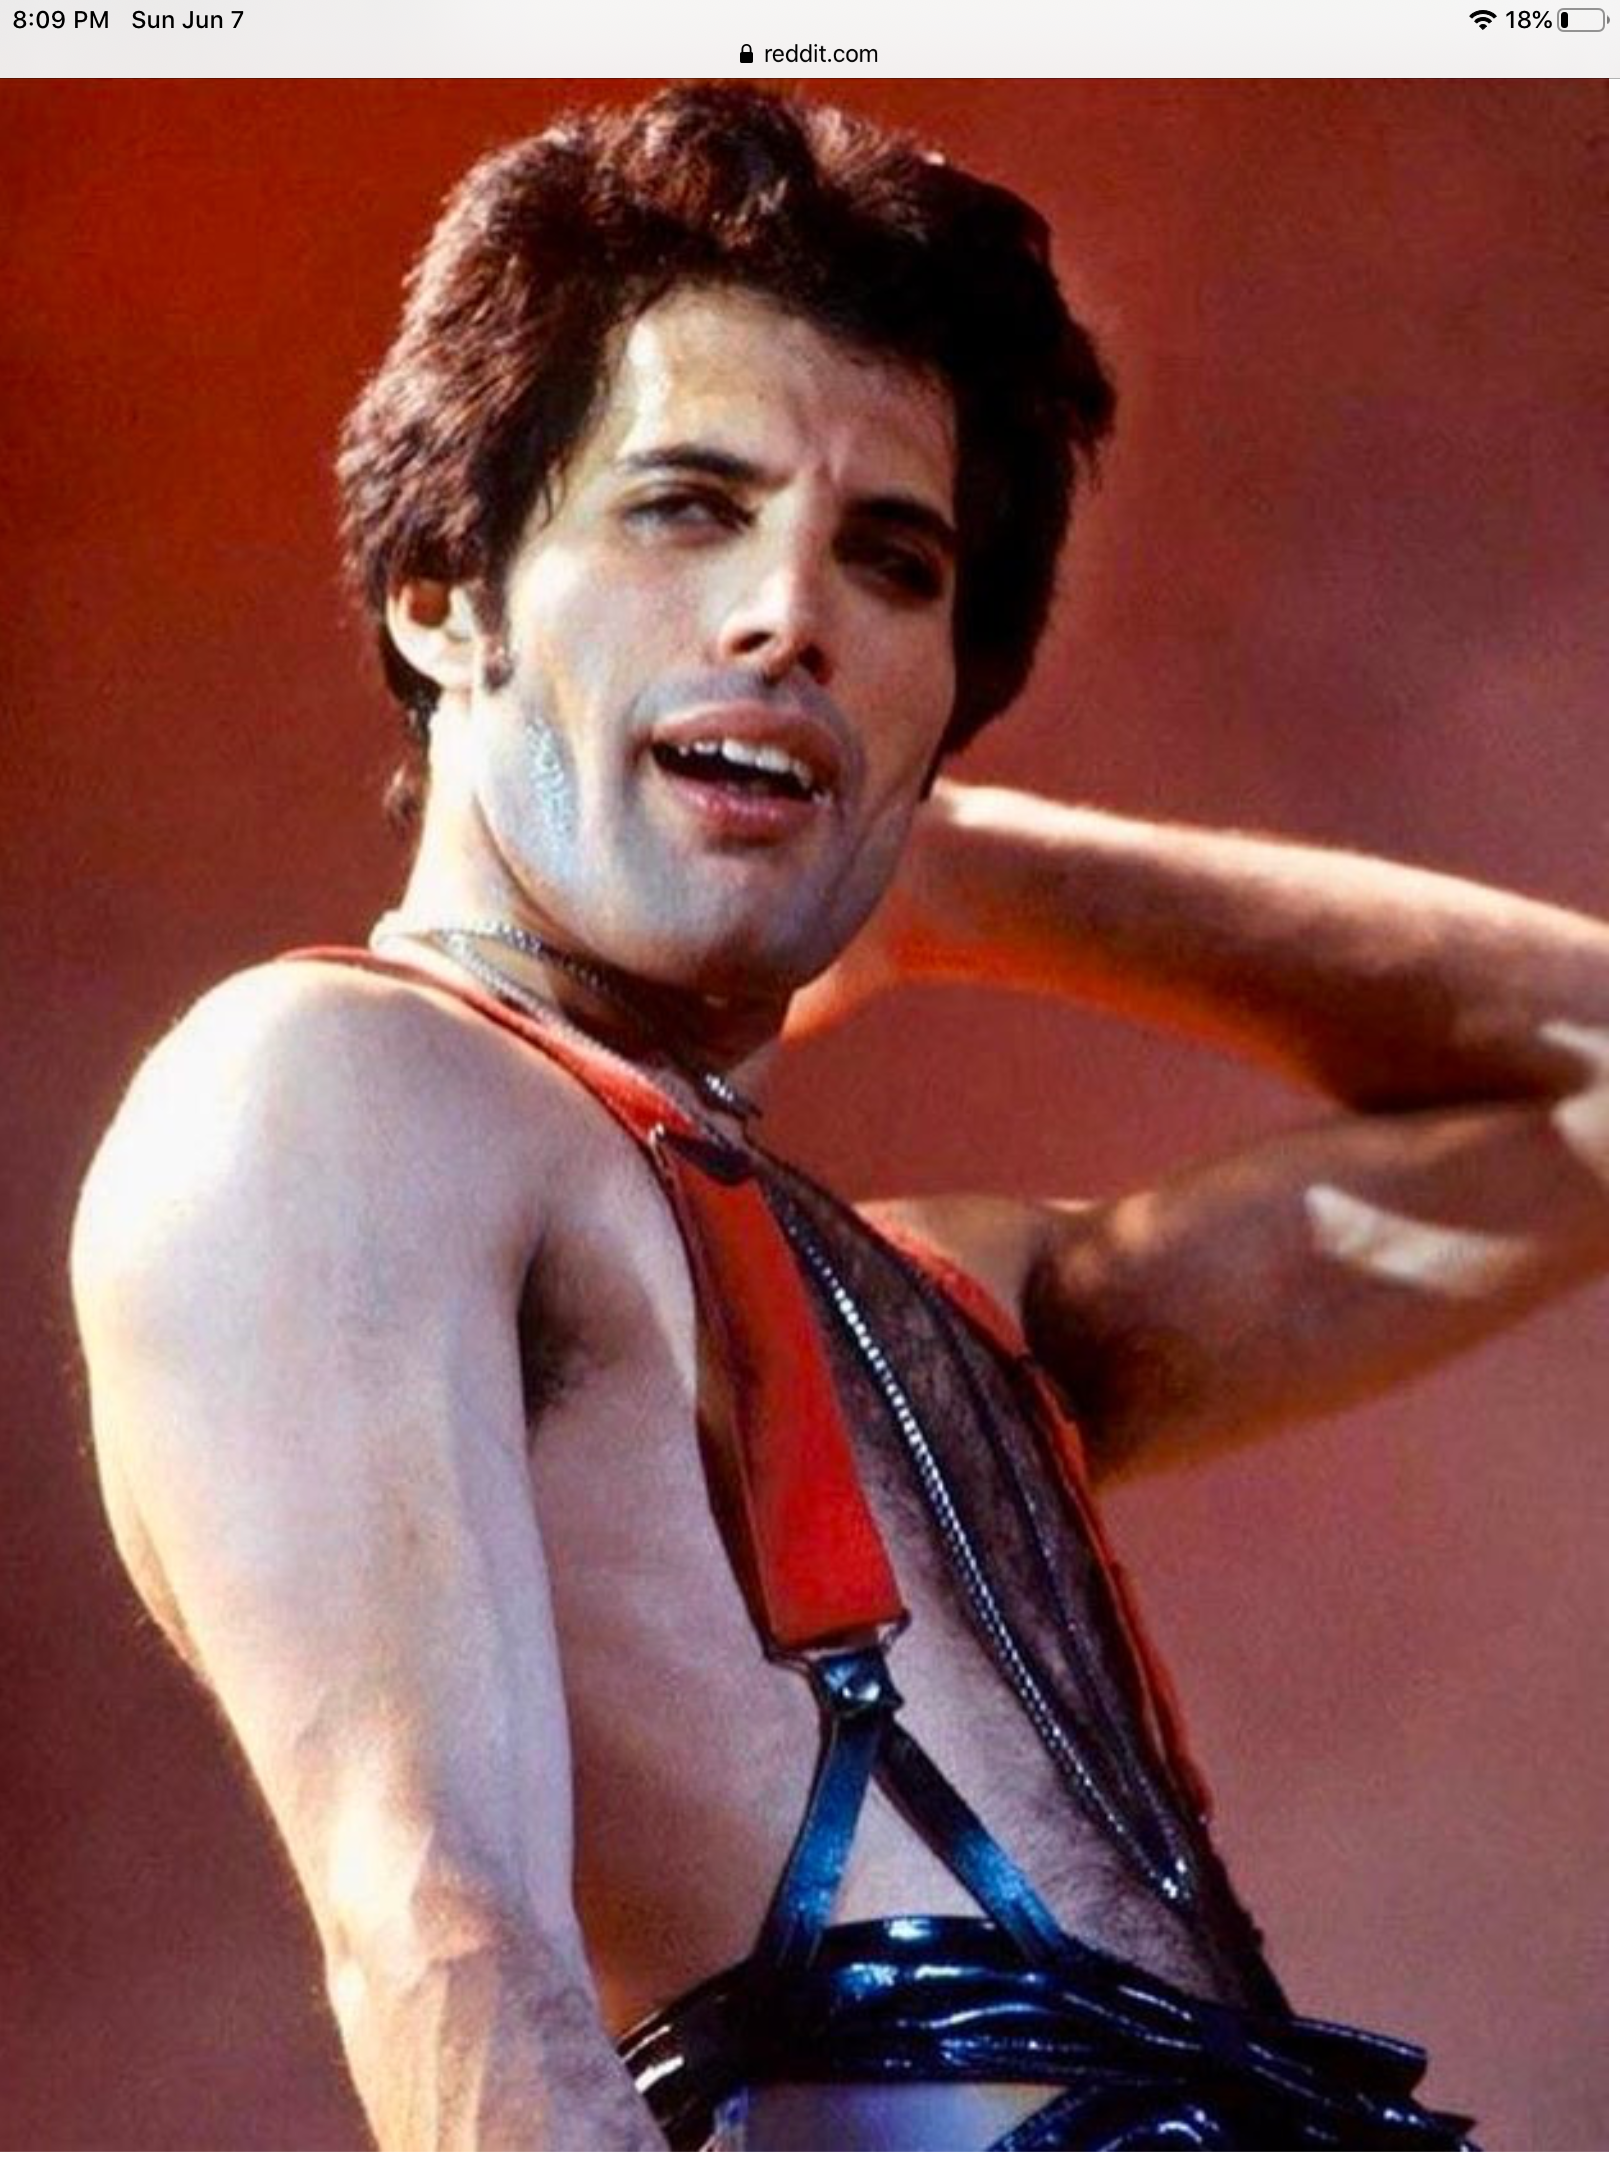 Do you like Freddie Mercury naked? - Freddie Mercury - Fanpop